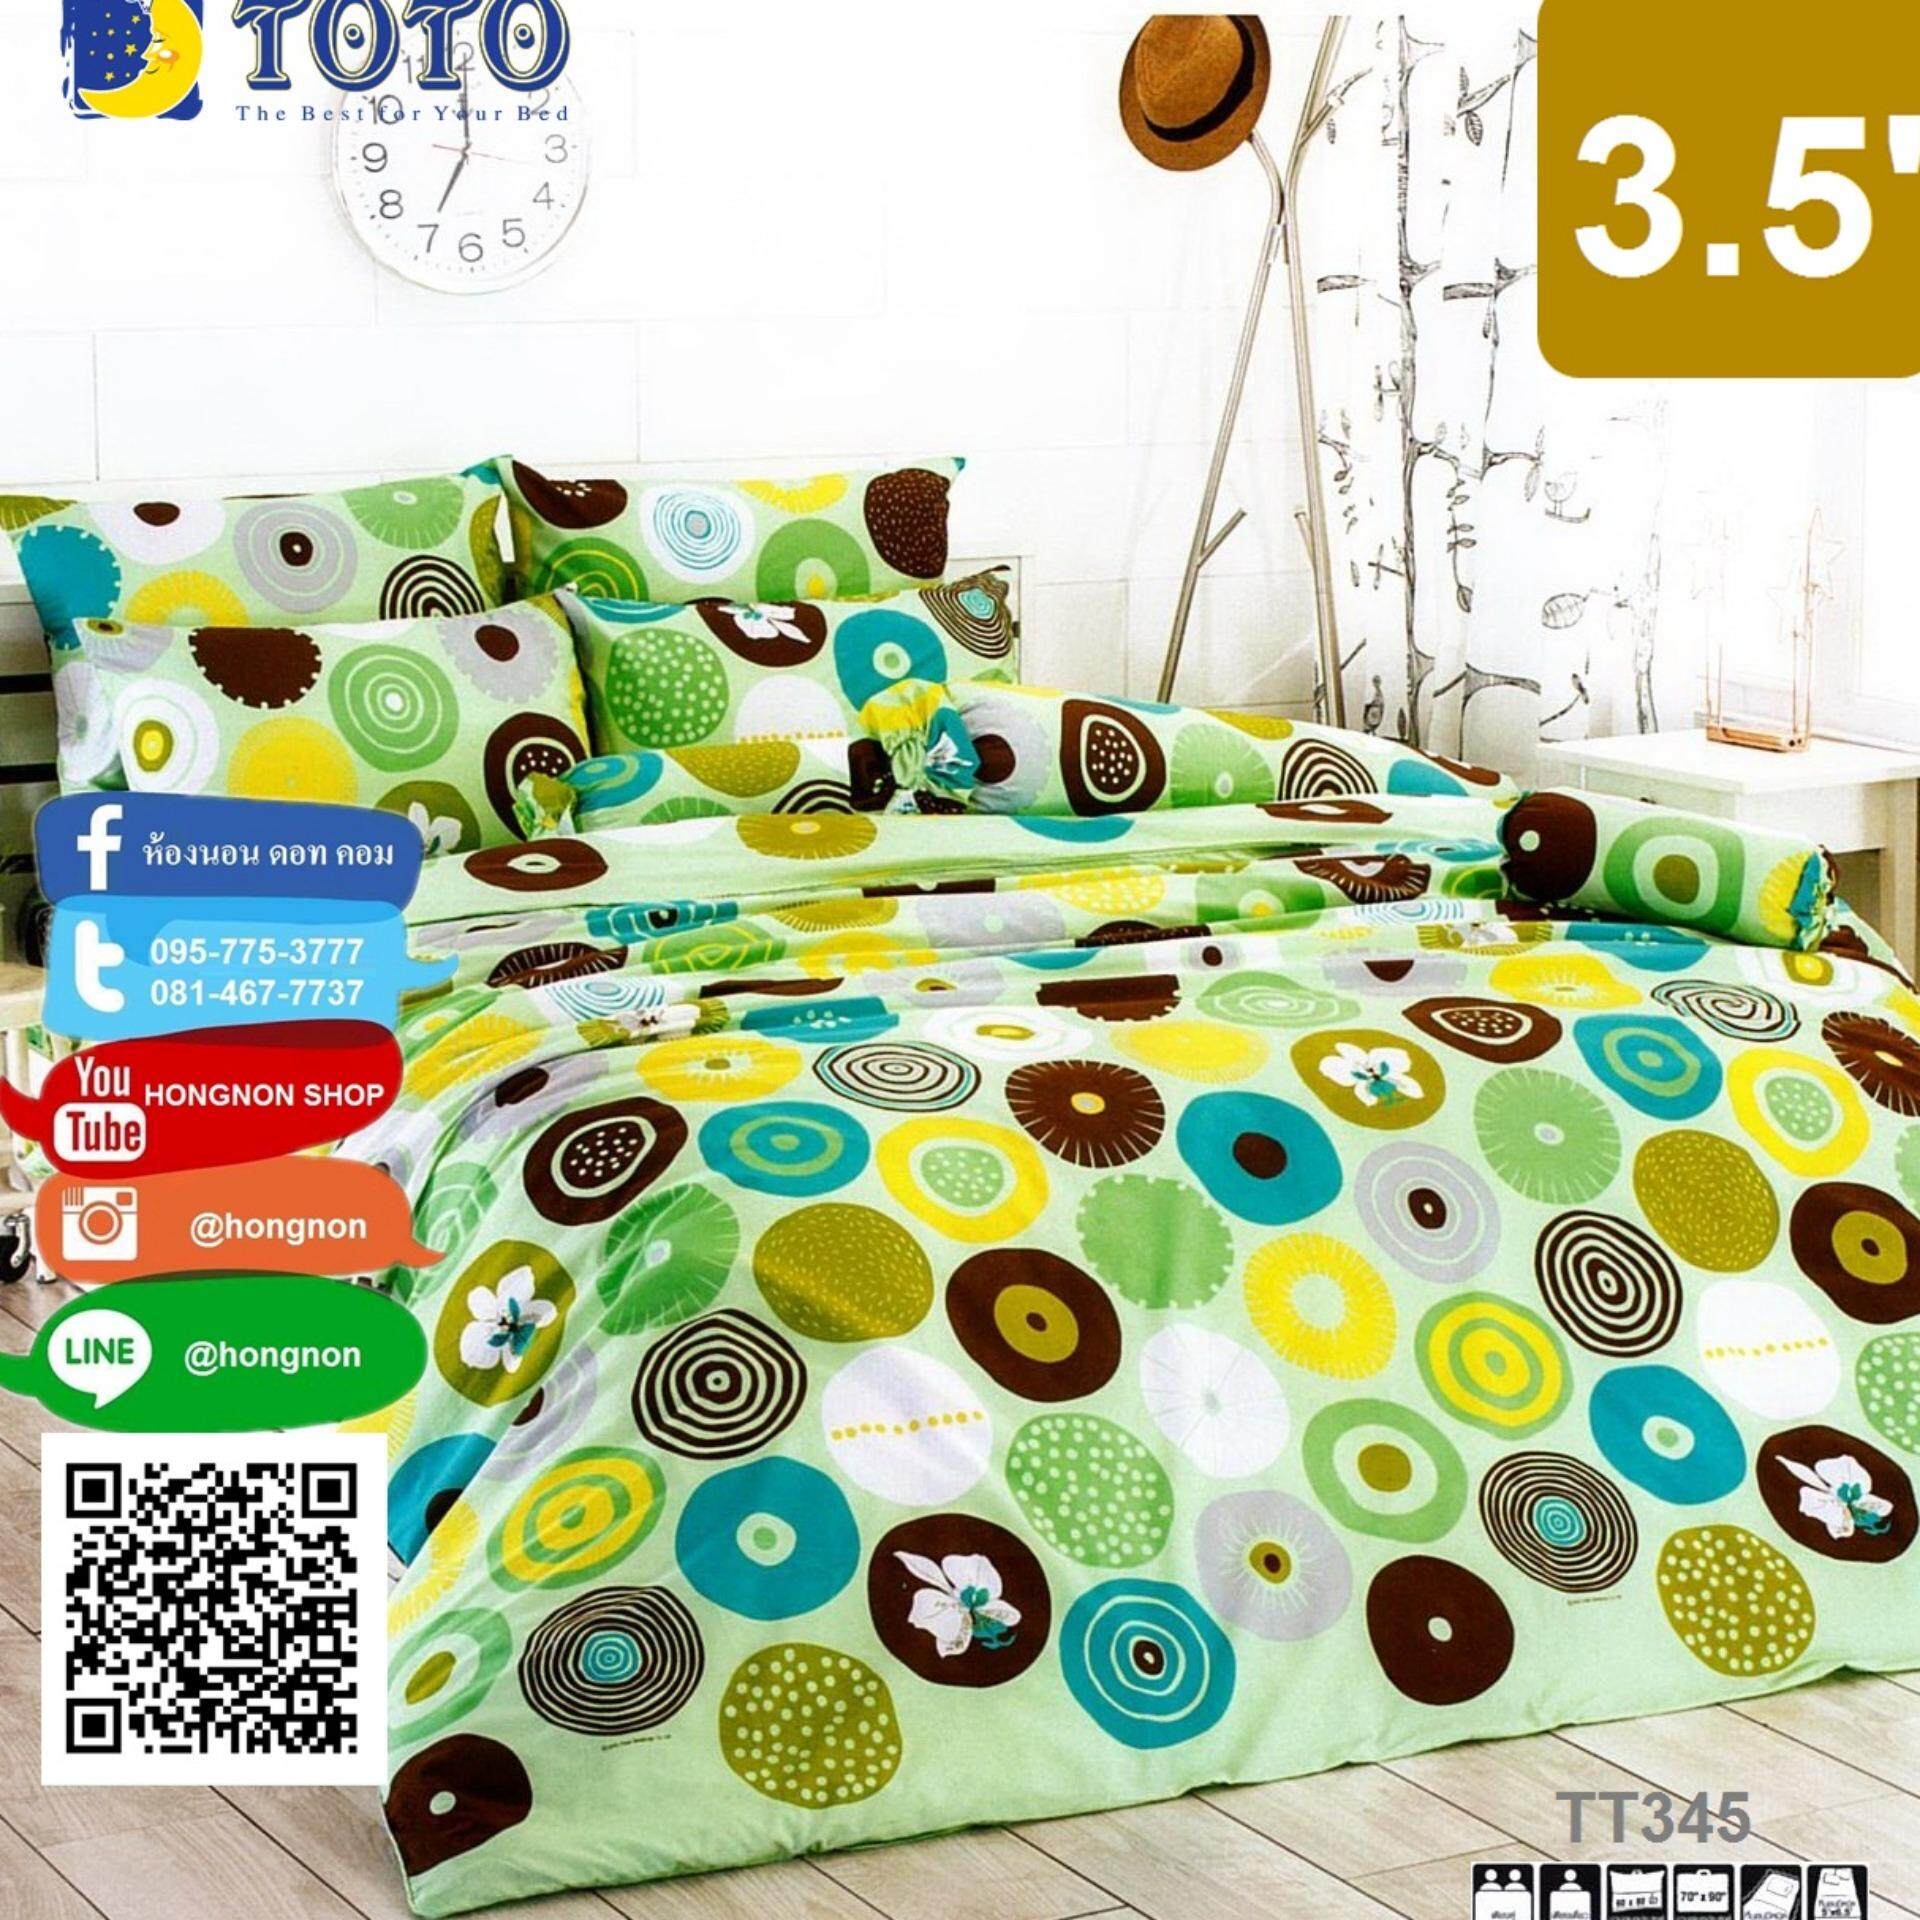 Toto ชุดผ้าปูที่นอน รุ่น TT345